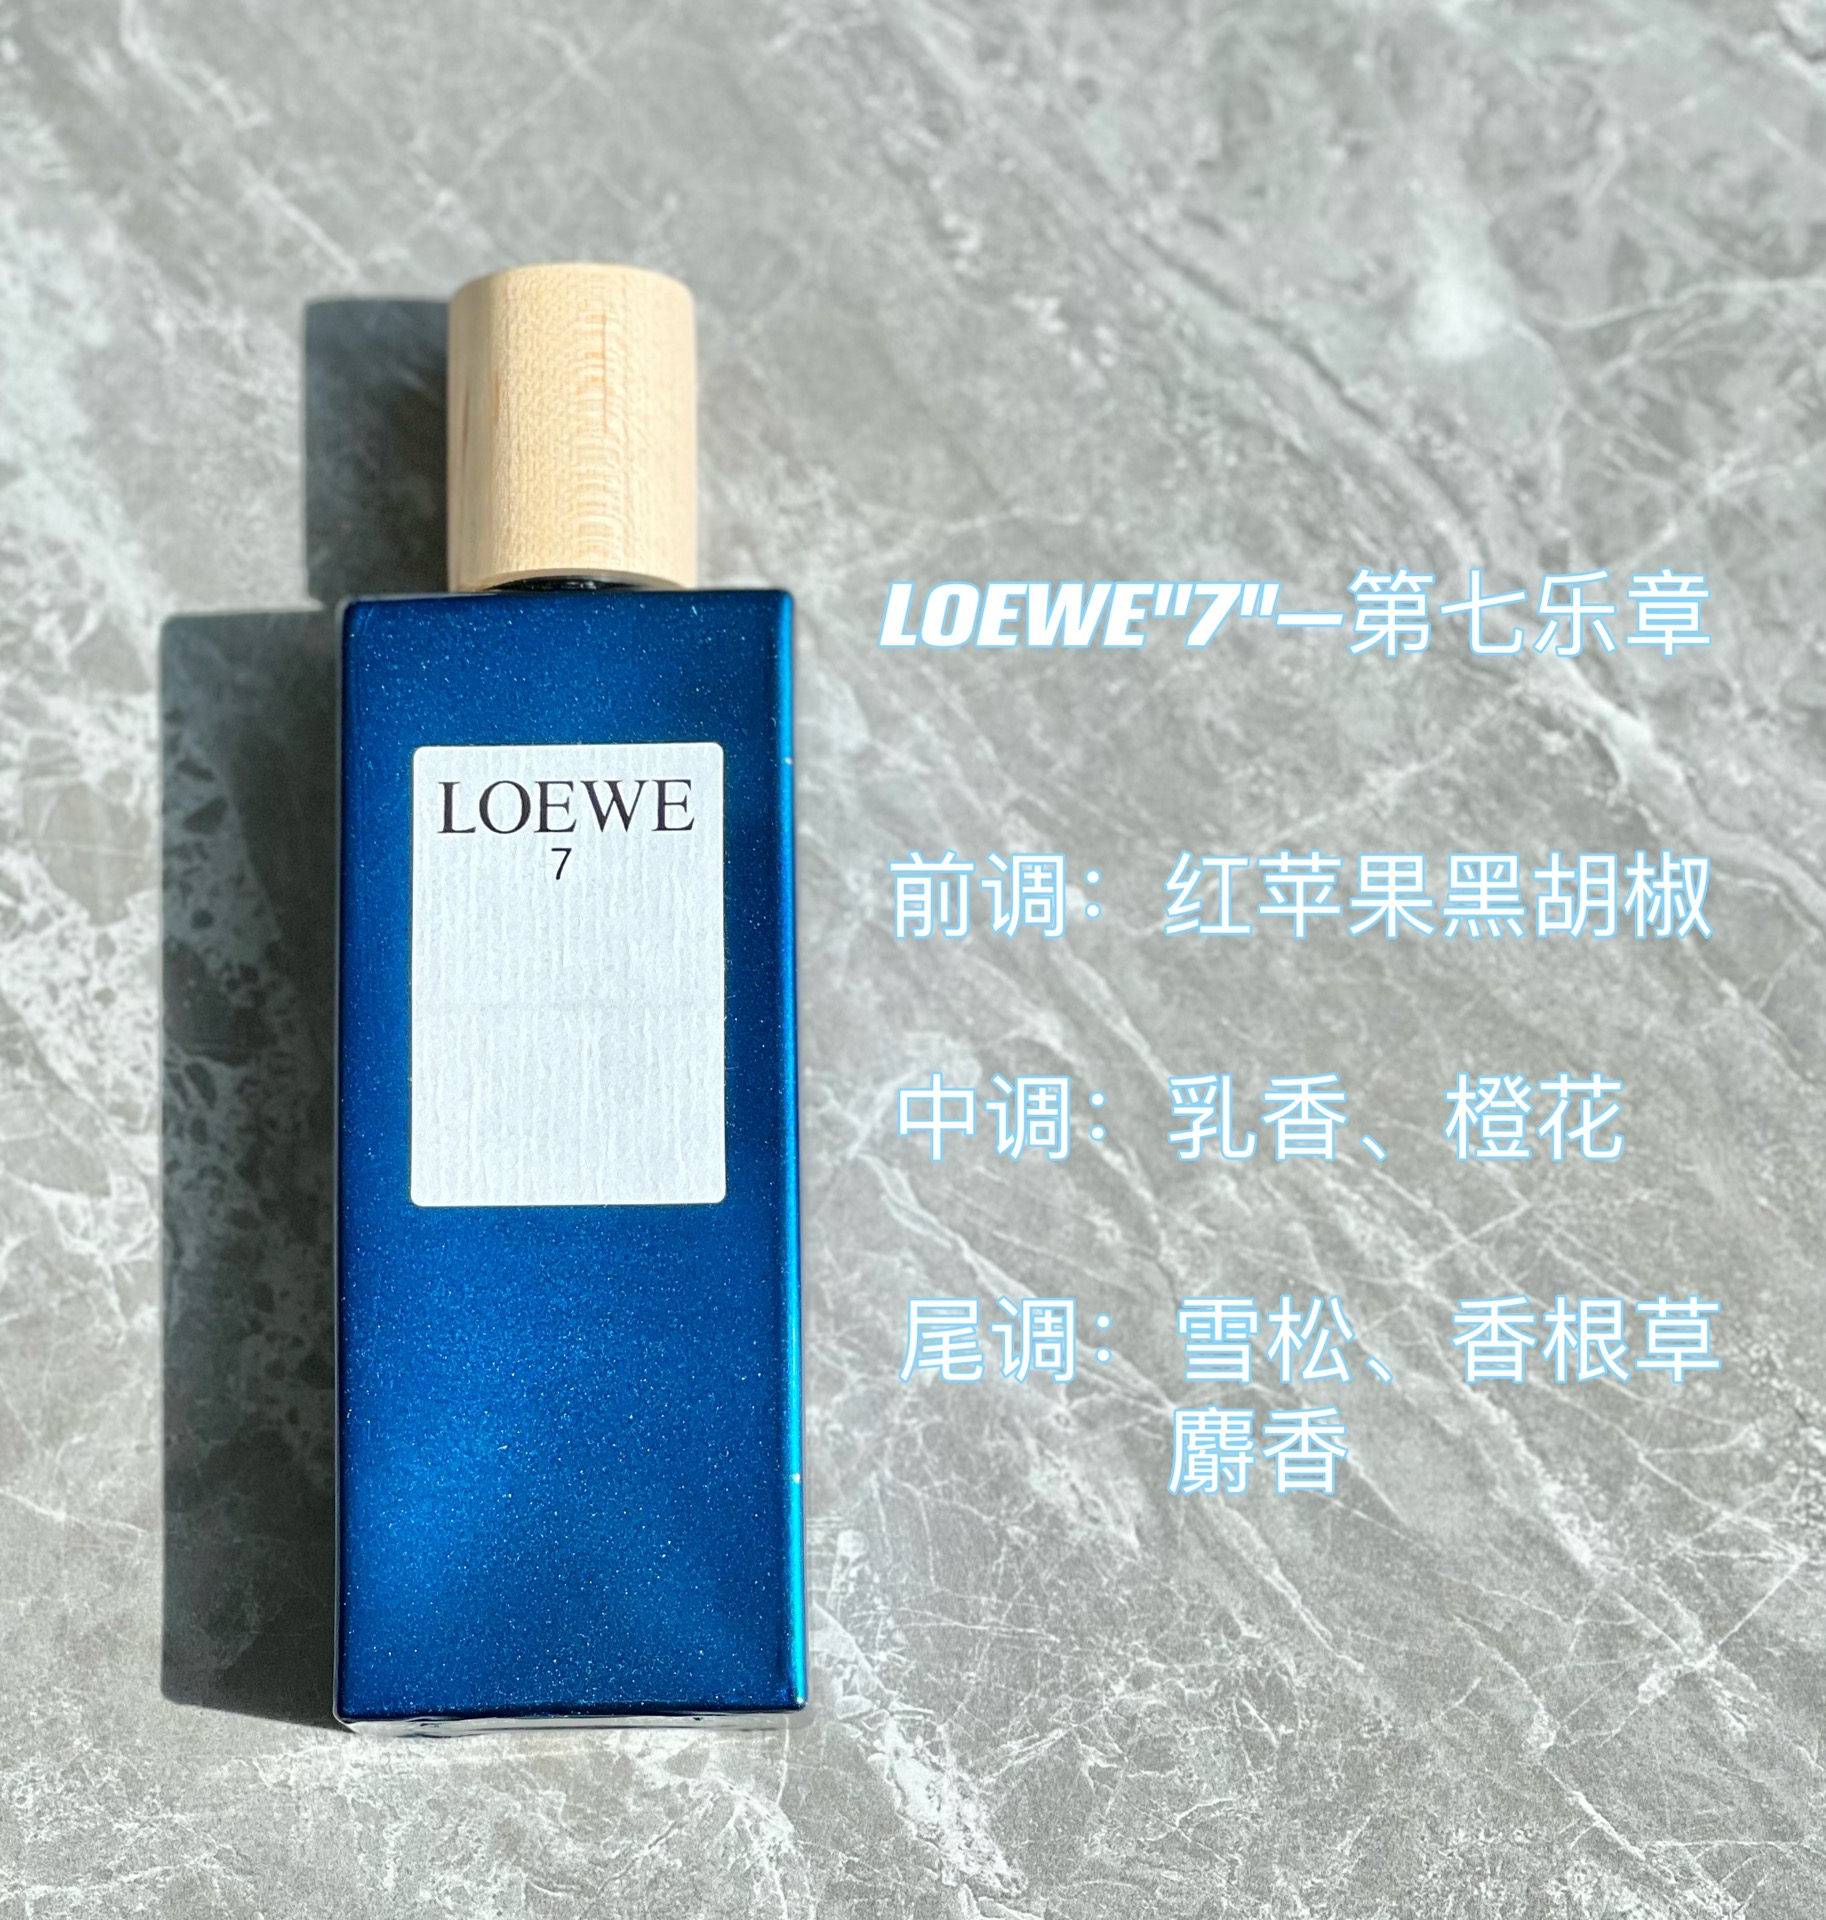 Loewe Perfume